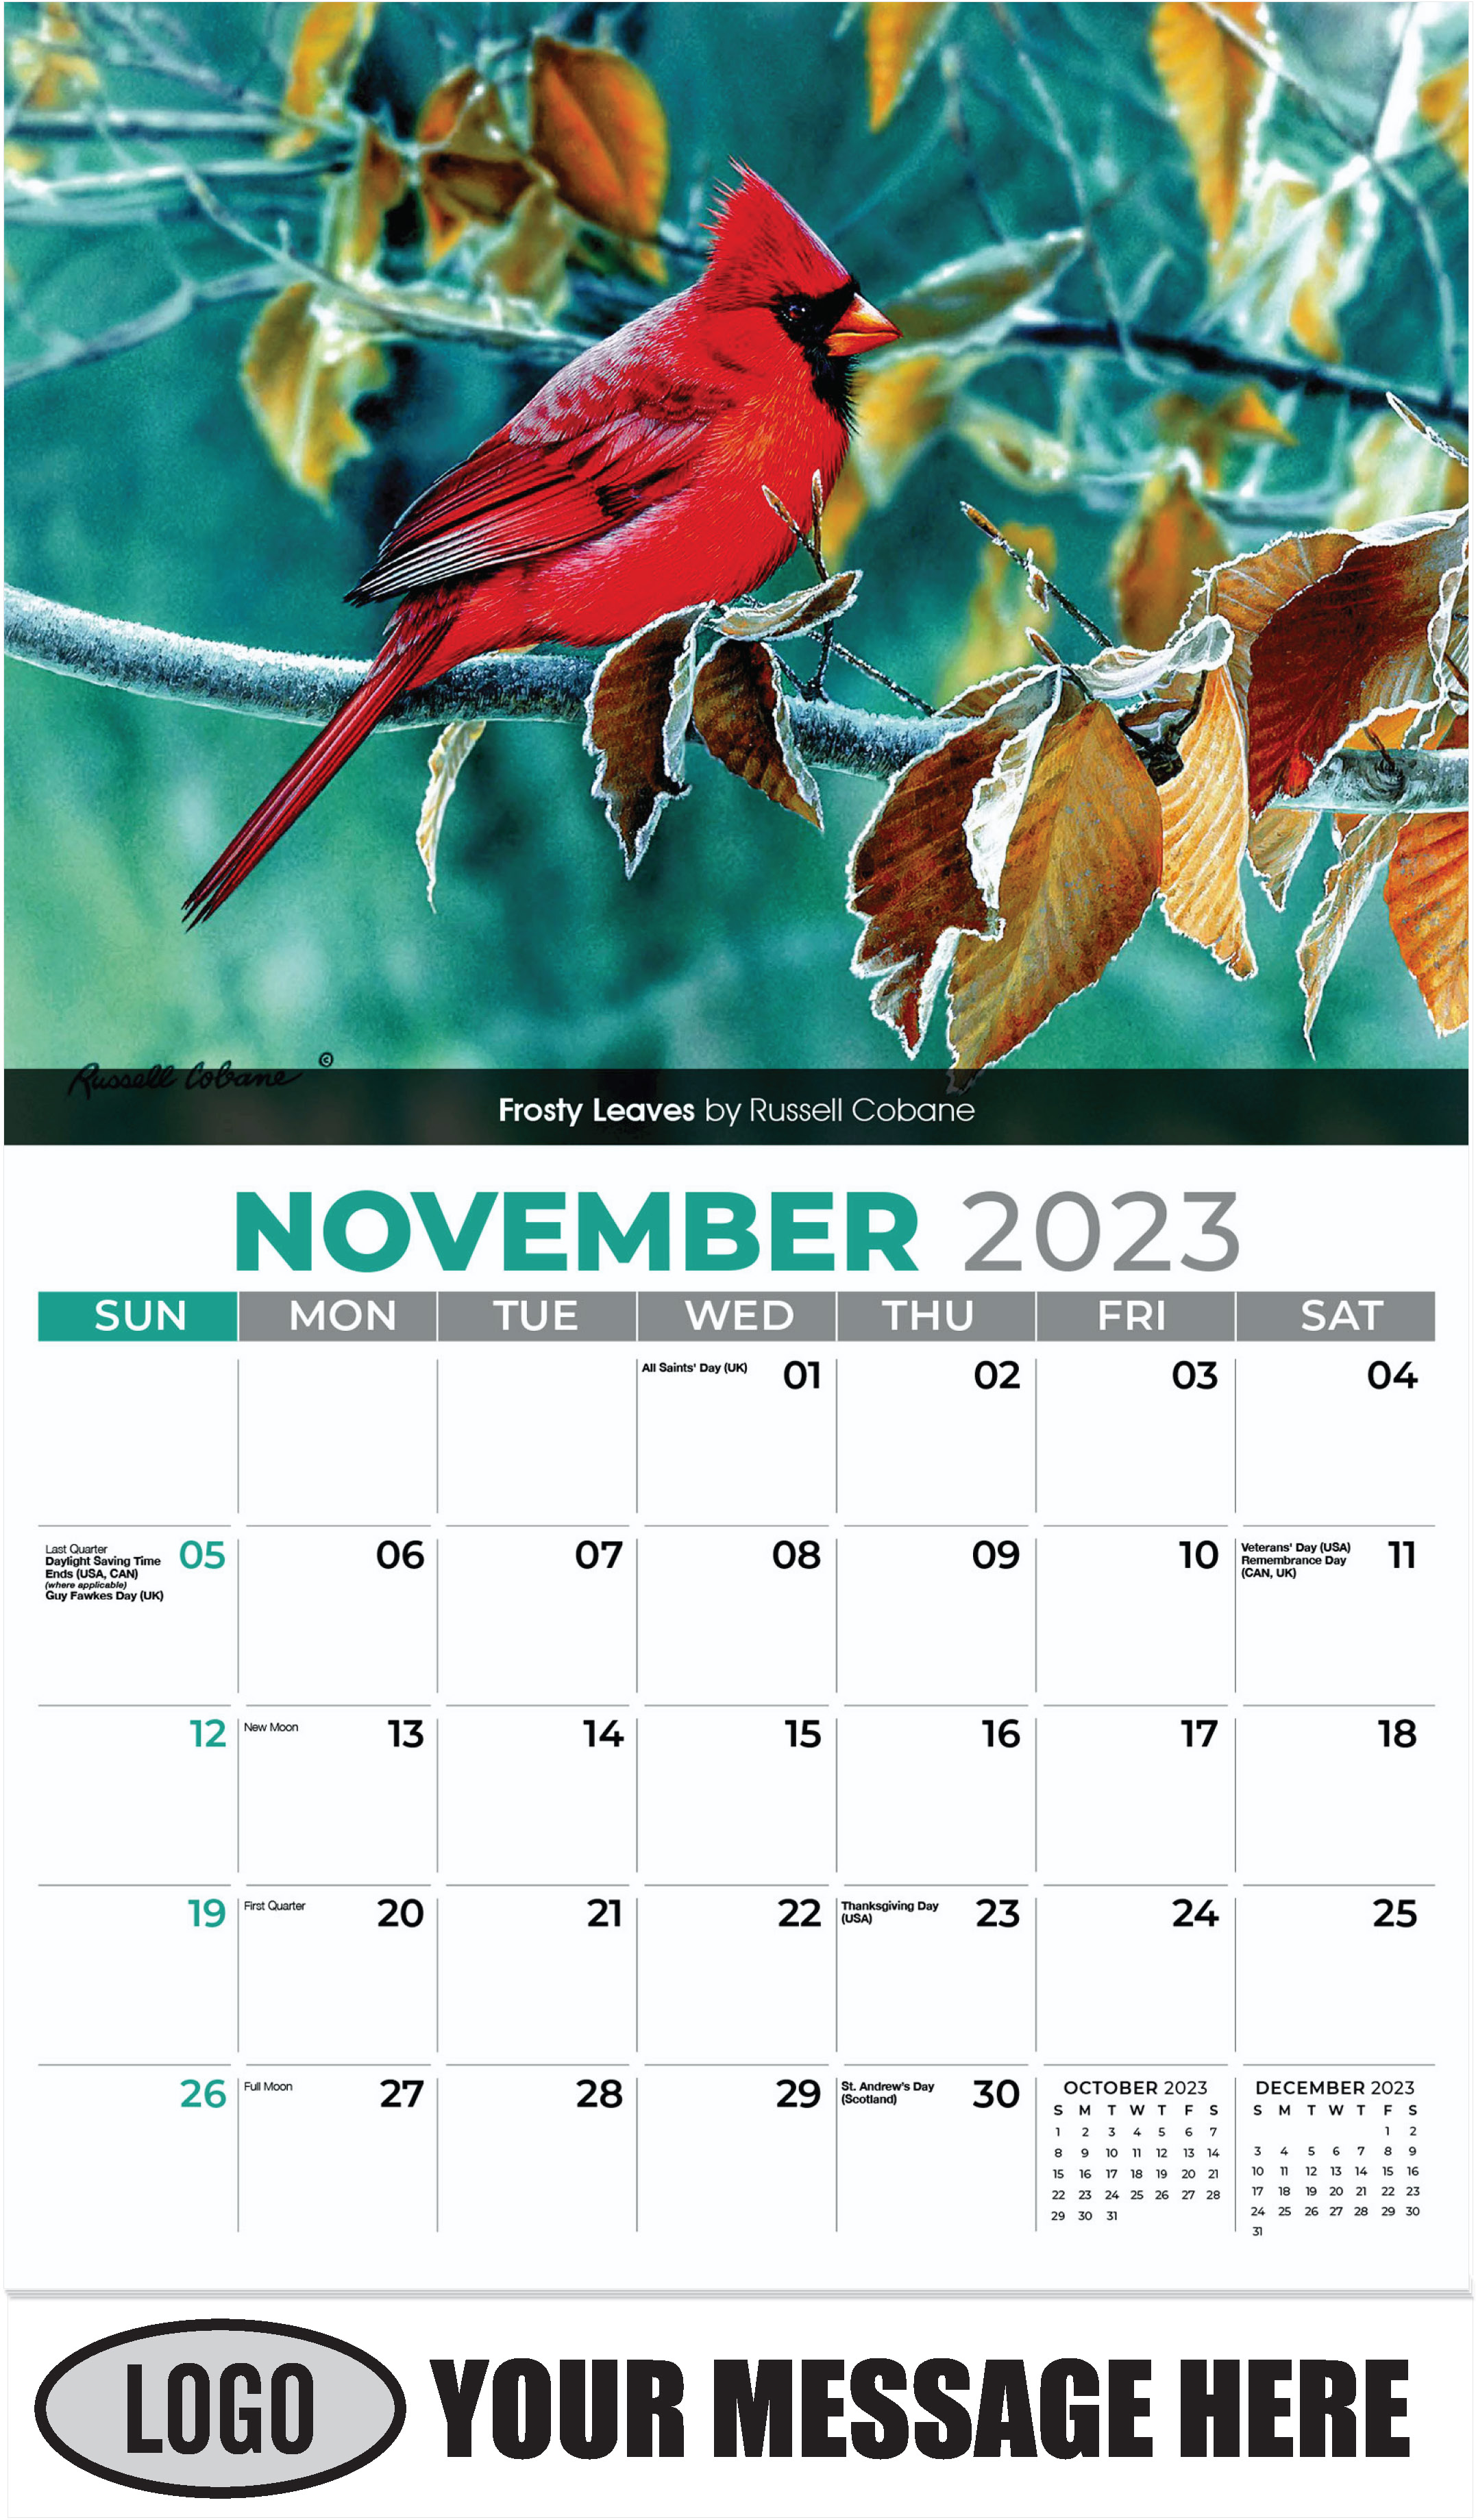 Frosty Leaves by Russell Cobane - November - Garden Birds 2023 Promotional Calendar